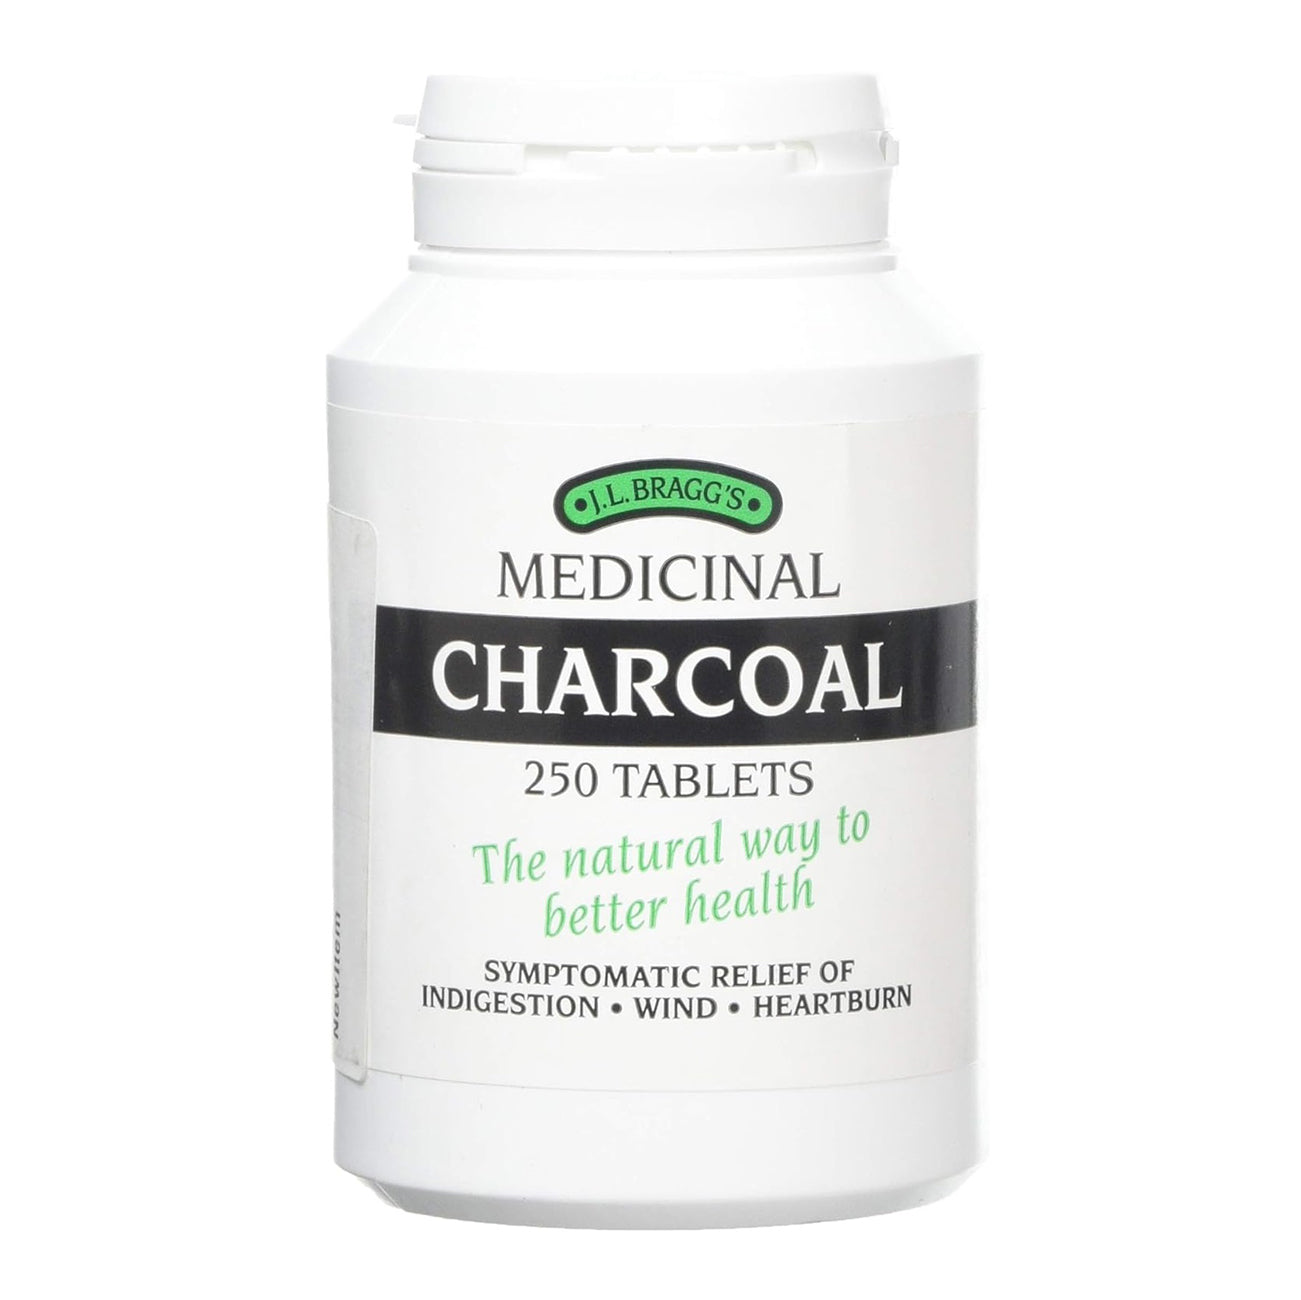 Charcoal 300mg 250 Tablets